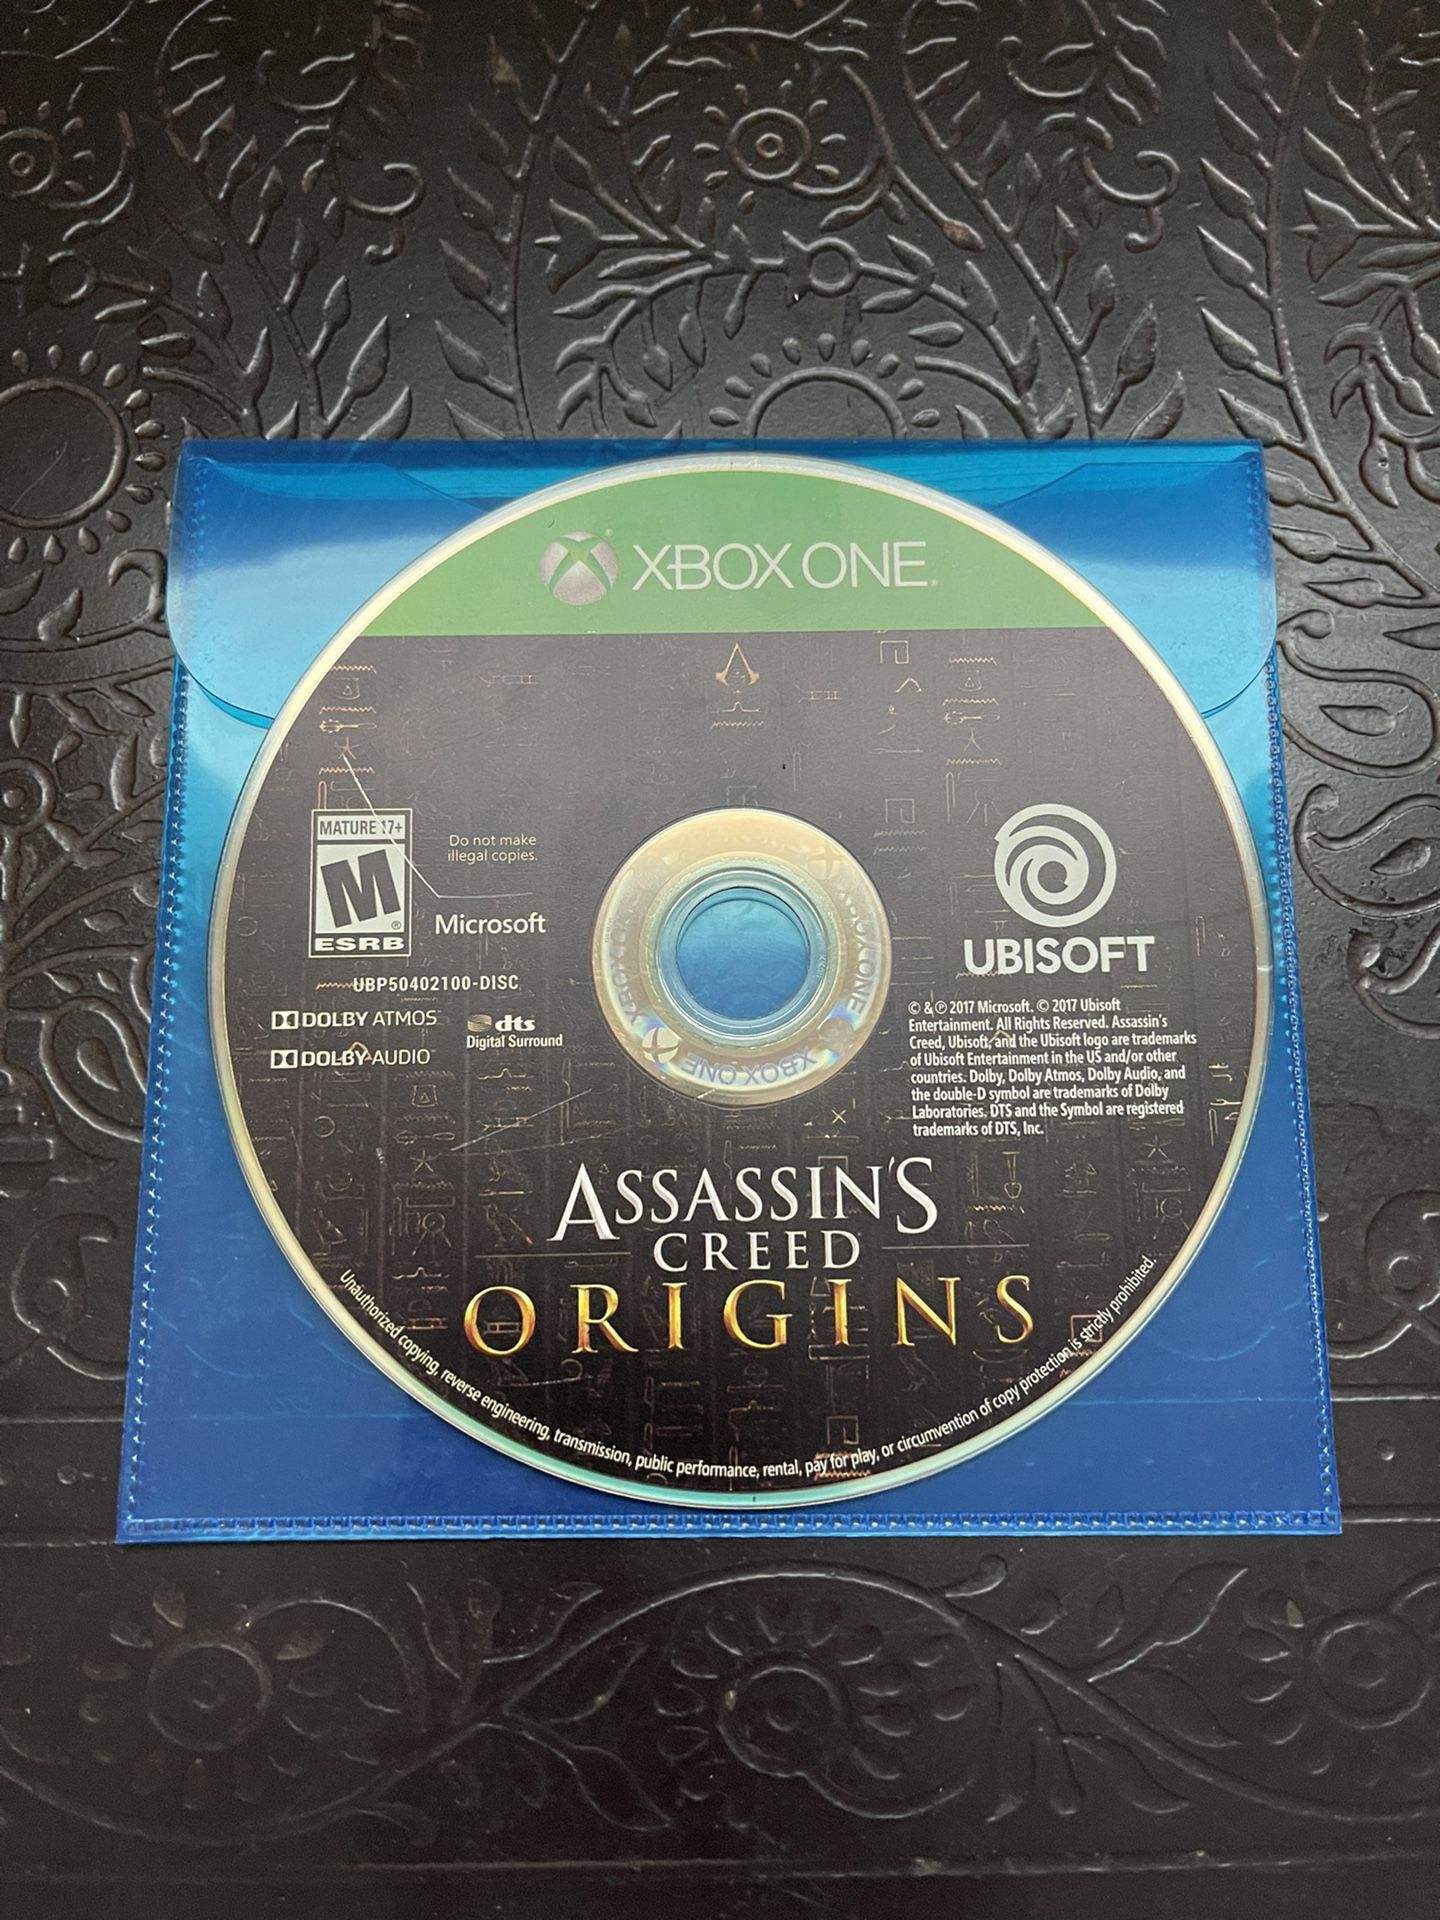 Assassins Creed Origins Xbox One